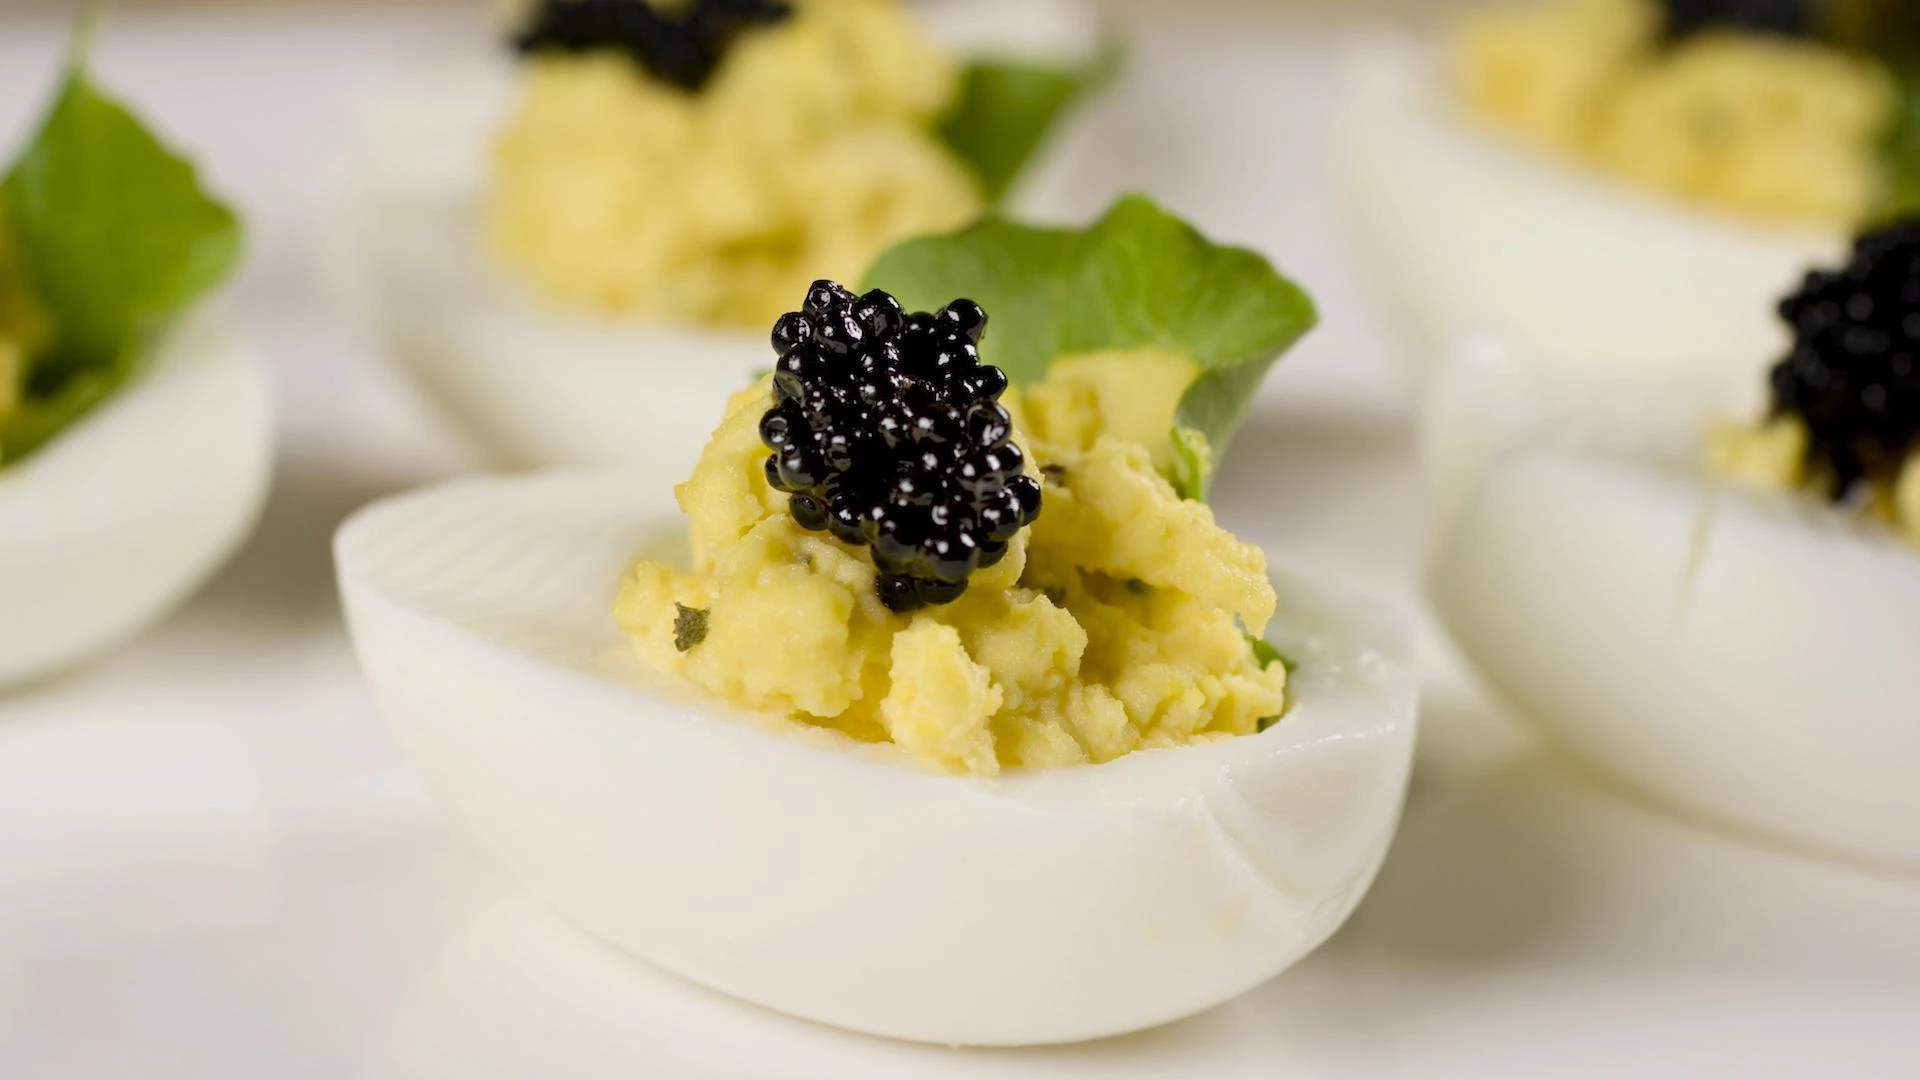 How to Serve Caviar - 5 Ways to Eat Caviar